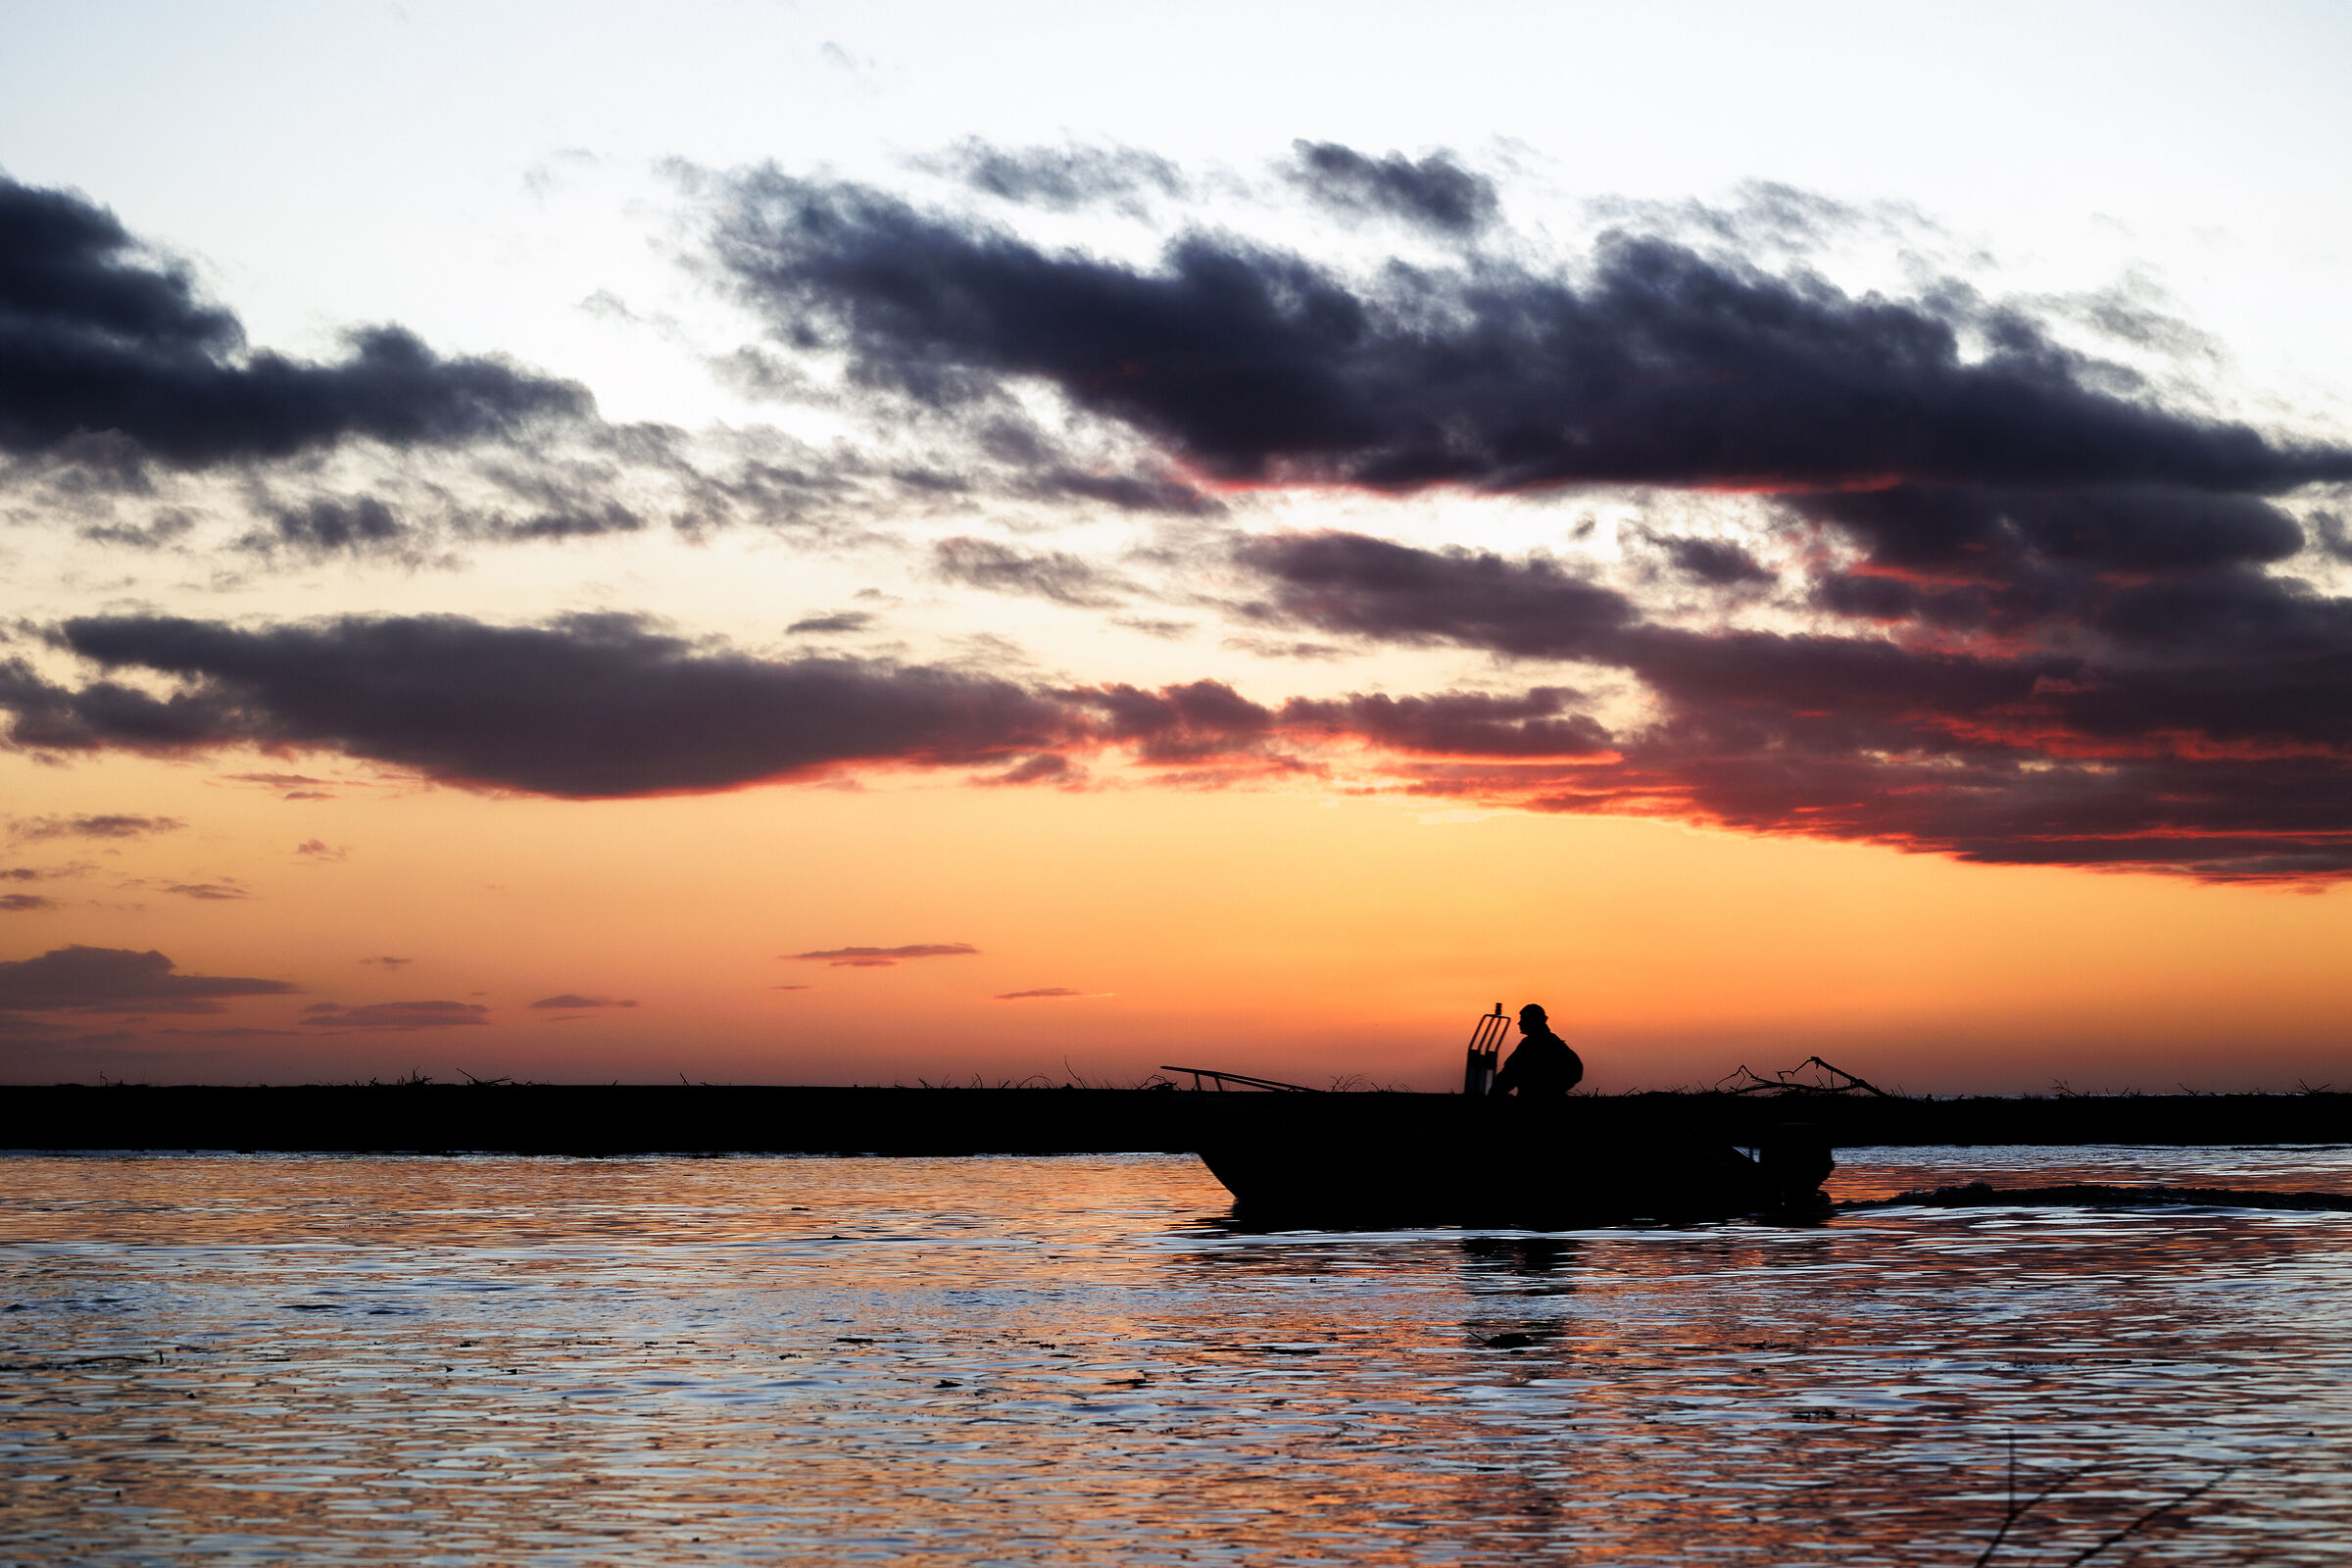 The fisherman returns at sunset ...